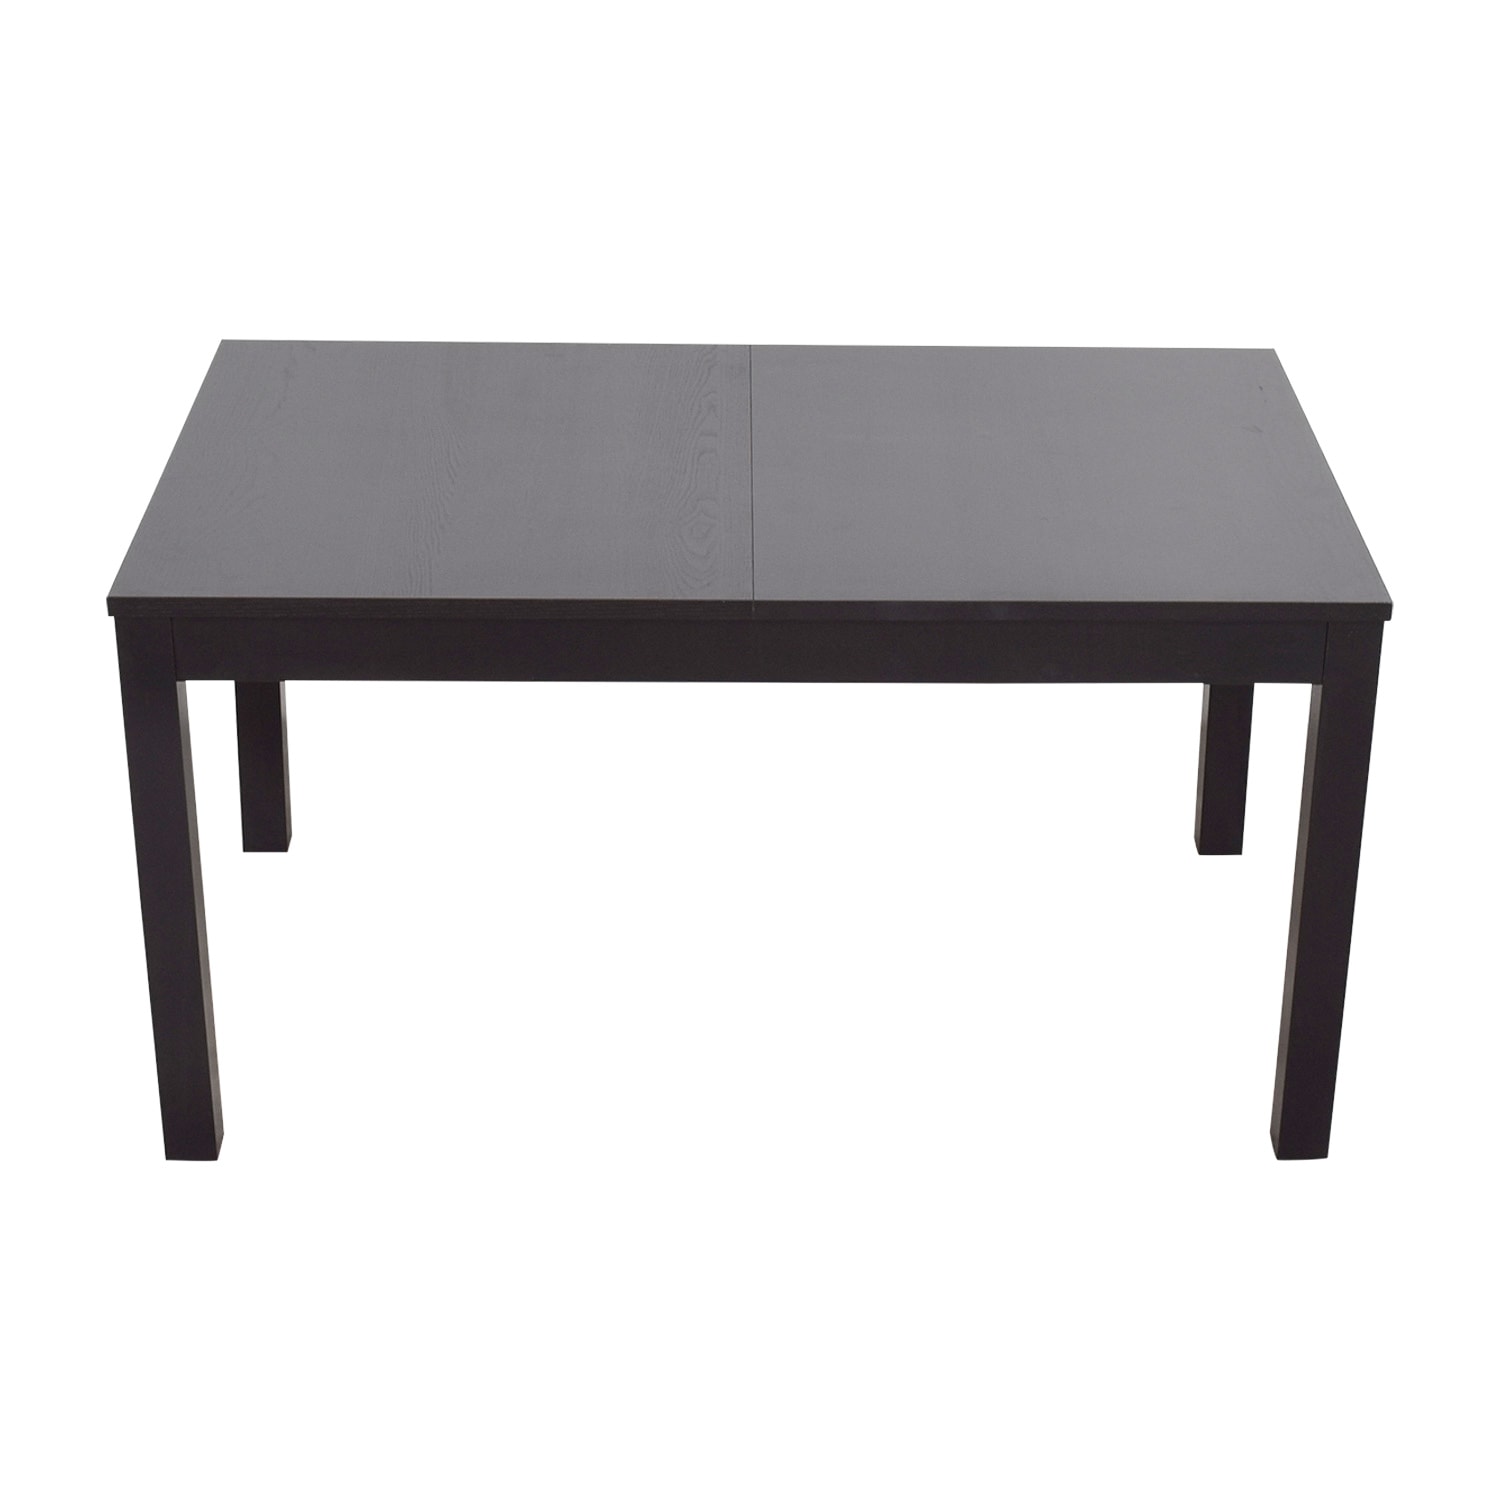 IKEA Bjursta Extendable Table / Tables